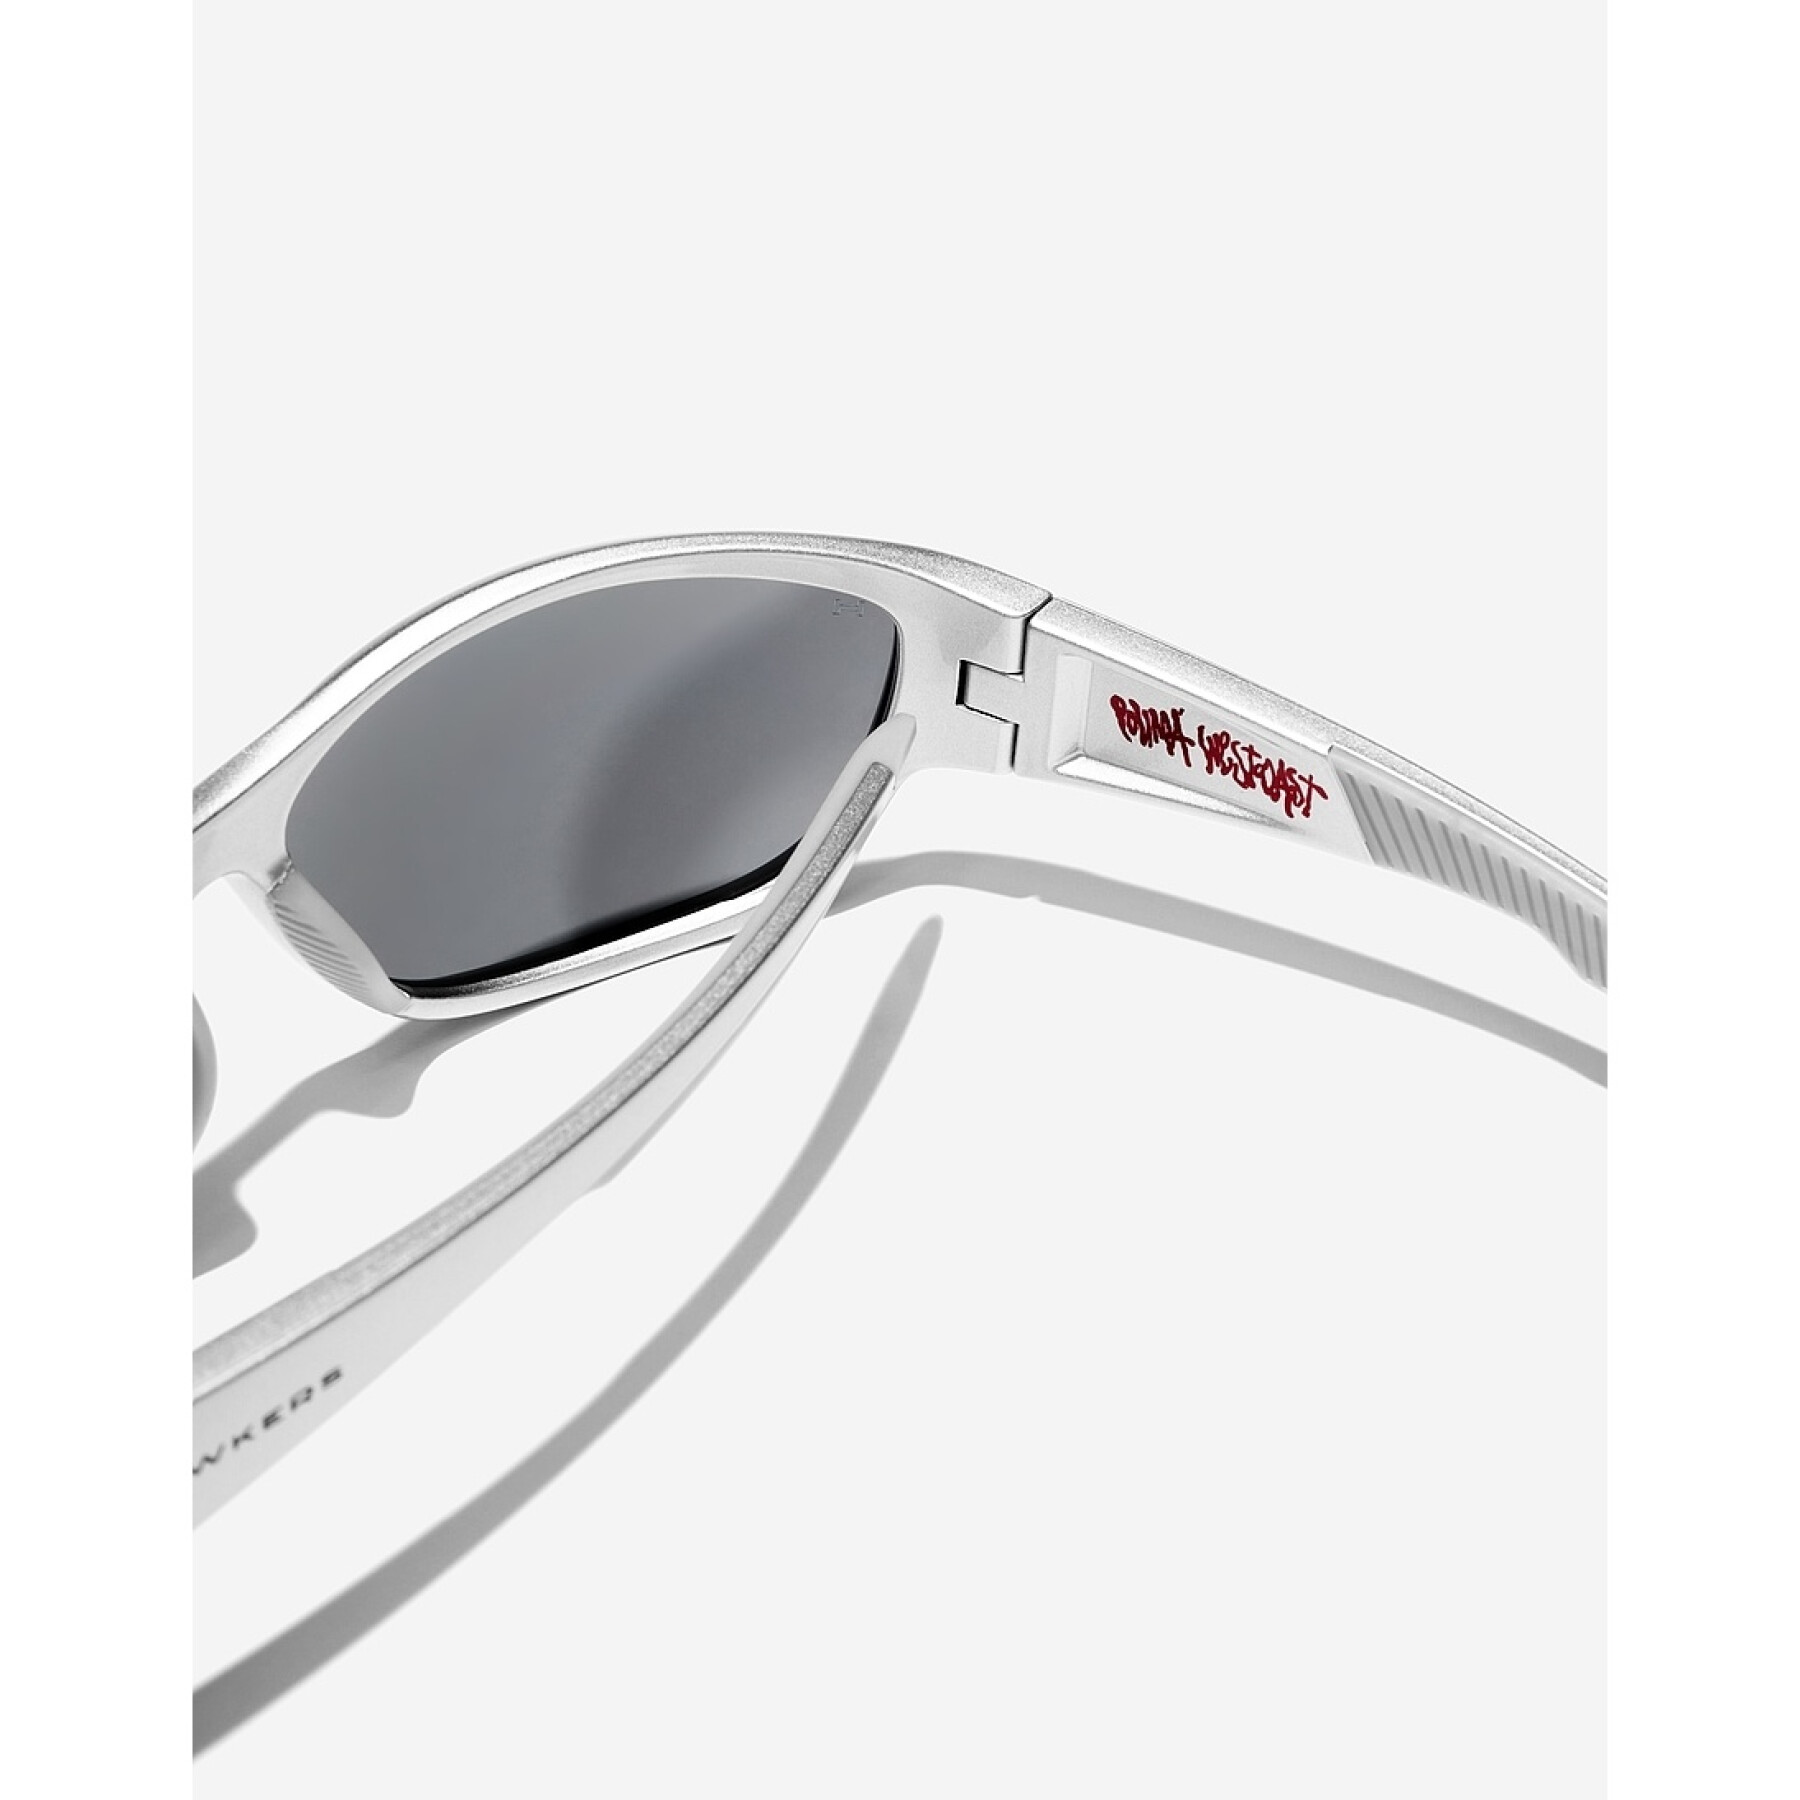 Sunglasses Hawkers Polimá - Rave